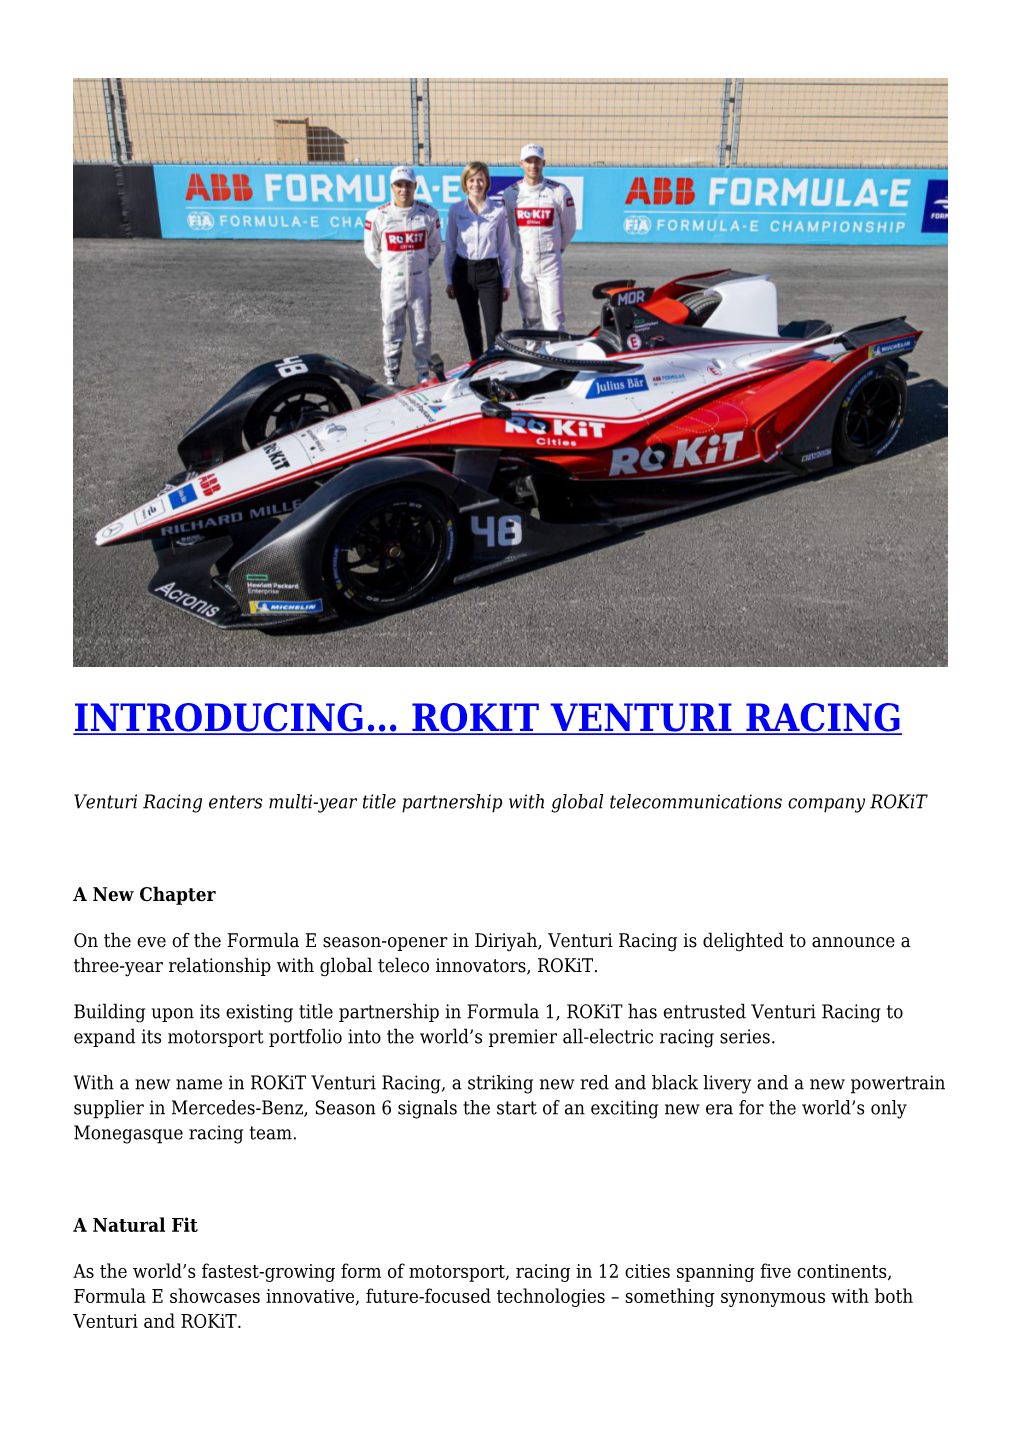 Introducing… Rokit Venturi Racing